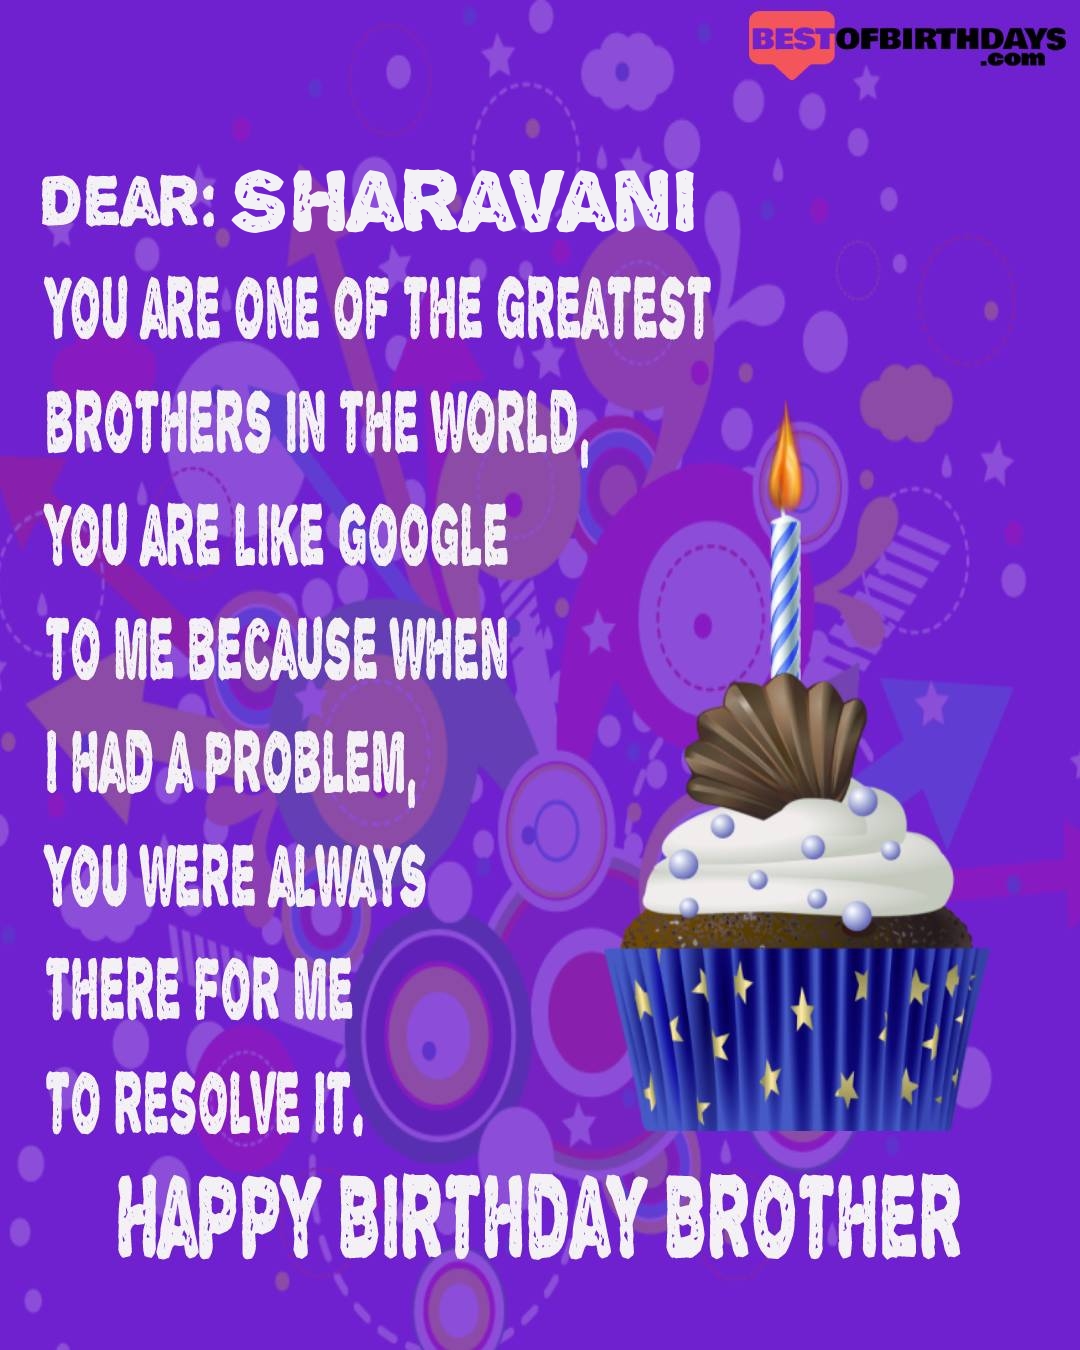 Happy birthday sharavani bhai brother bro